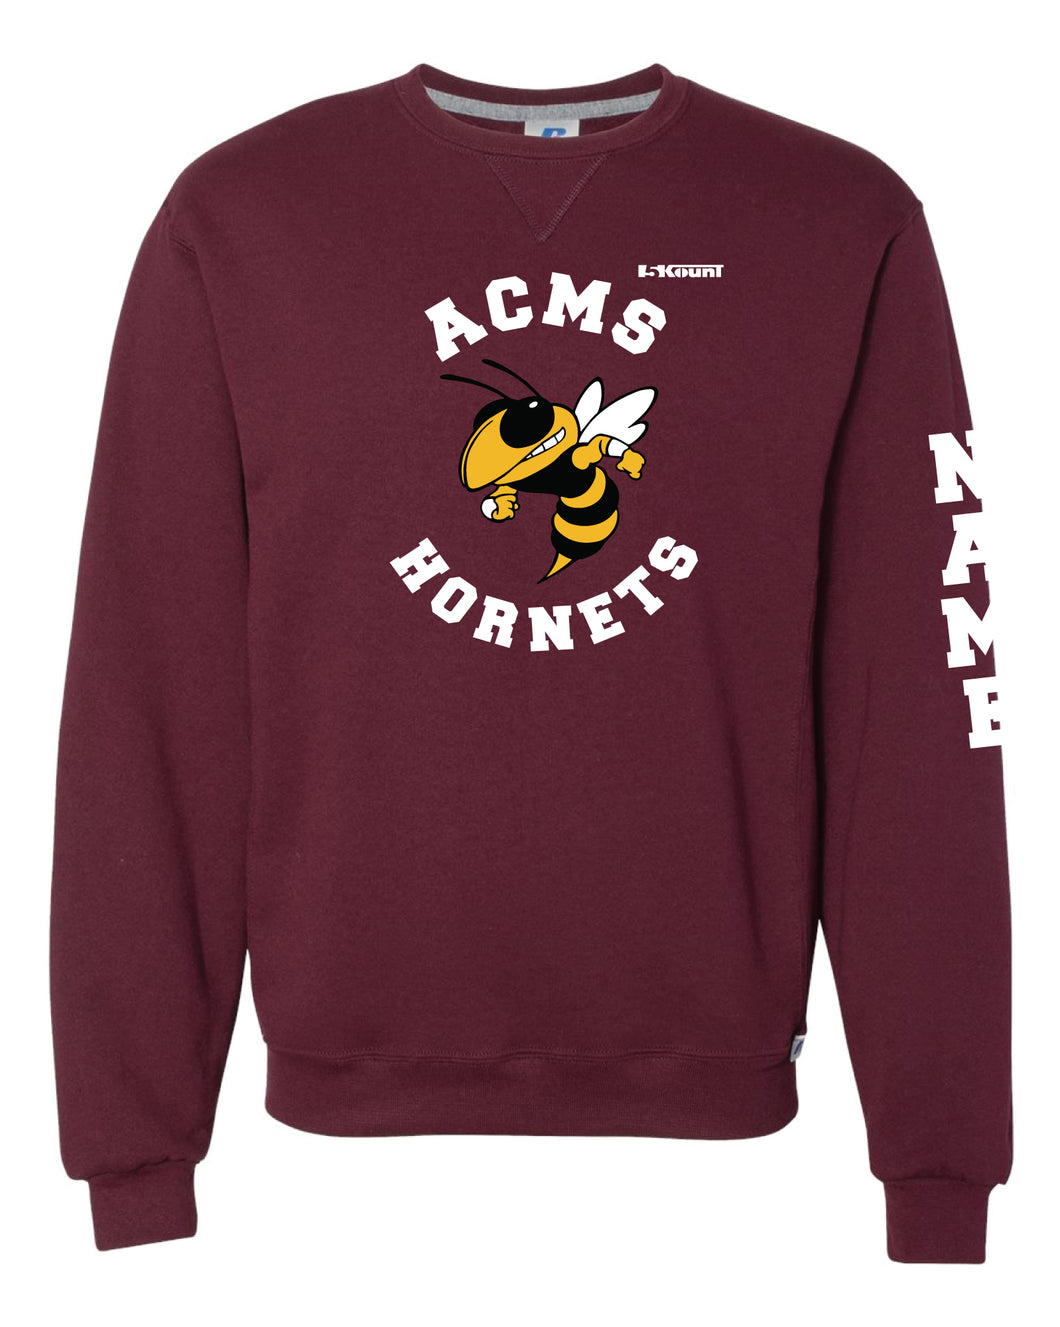 Anne Chesnutt Hornets Russell Athletic Cotton Crewneck Sweatshirt - Maroon (Meets School Uniform Requirements) - 5KounT2018